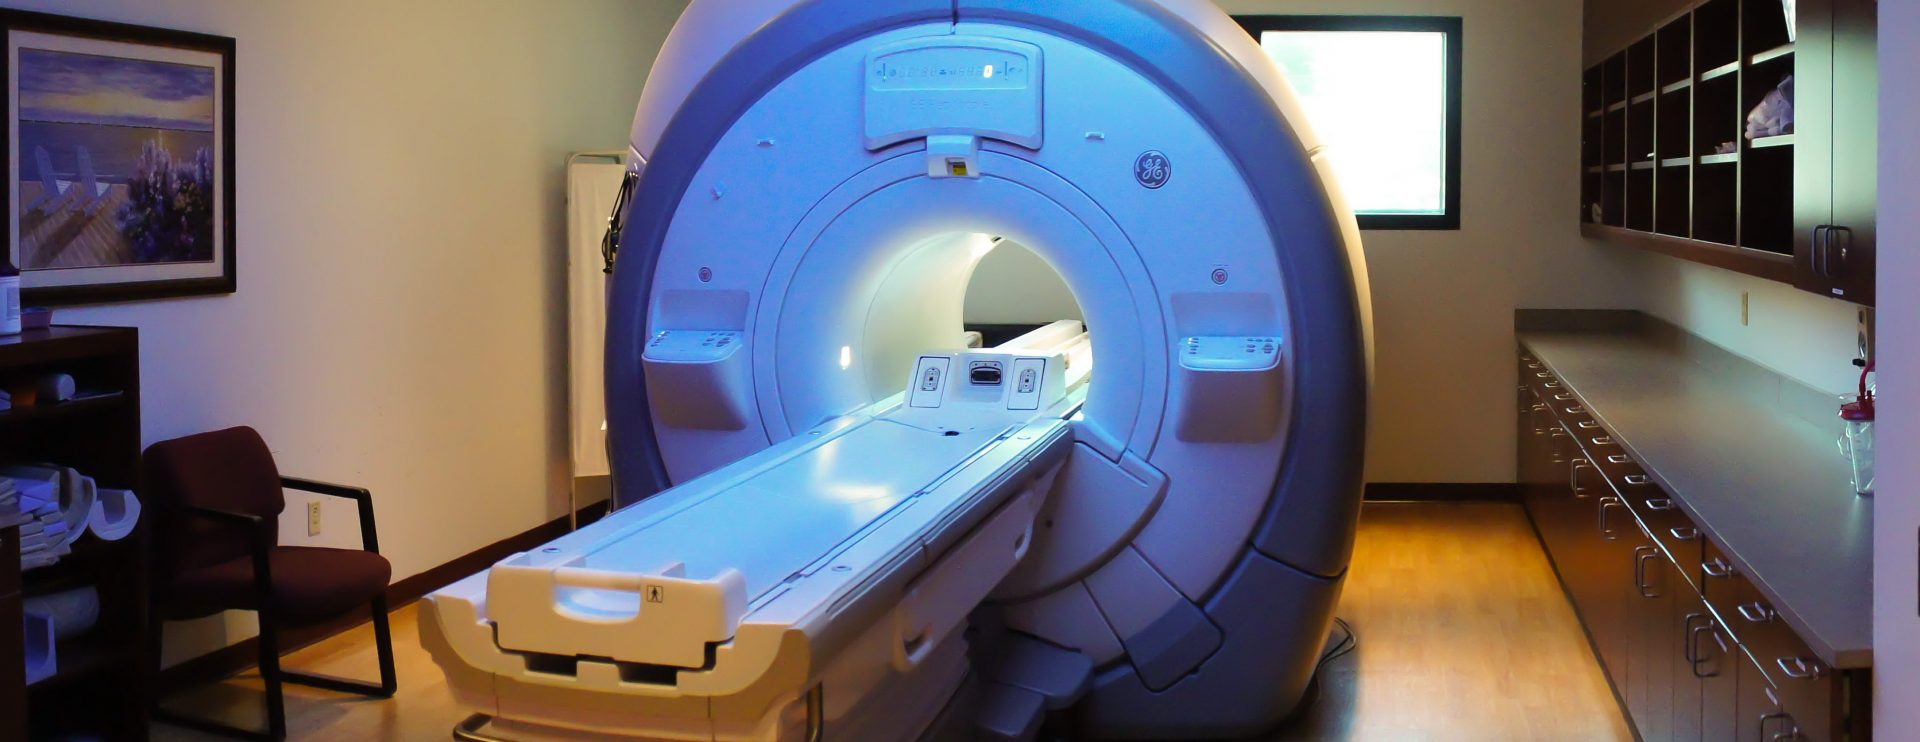 MRI Abdominal Case Study